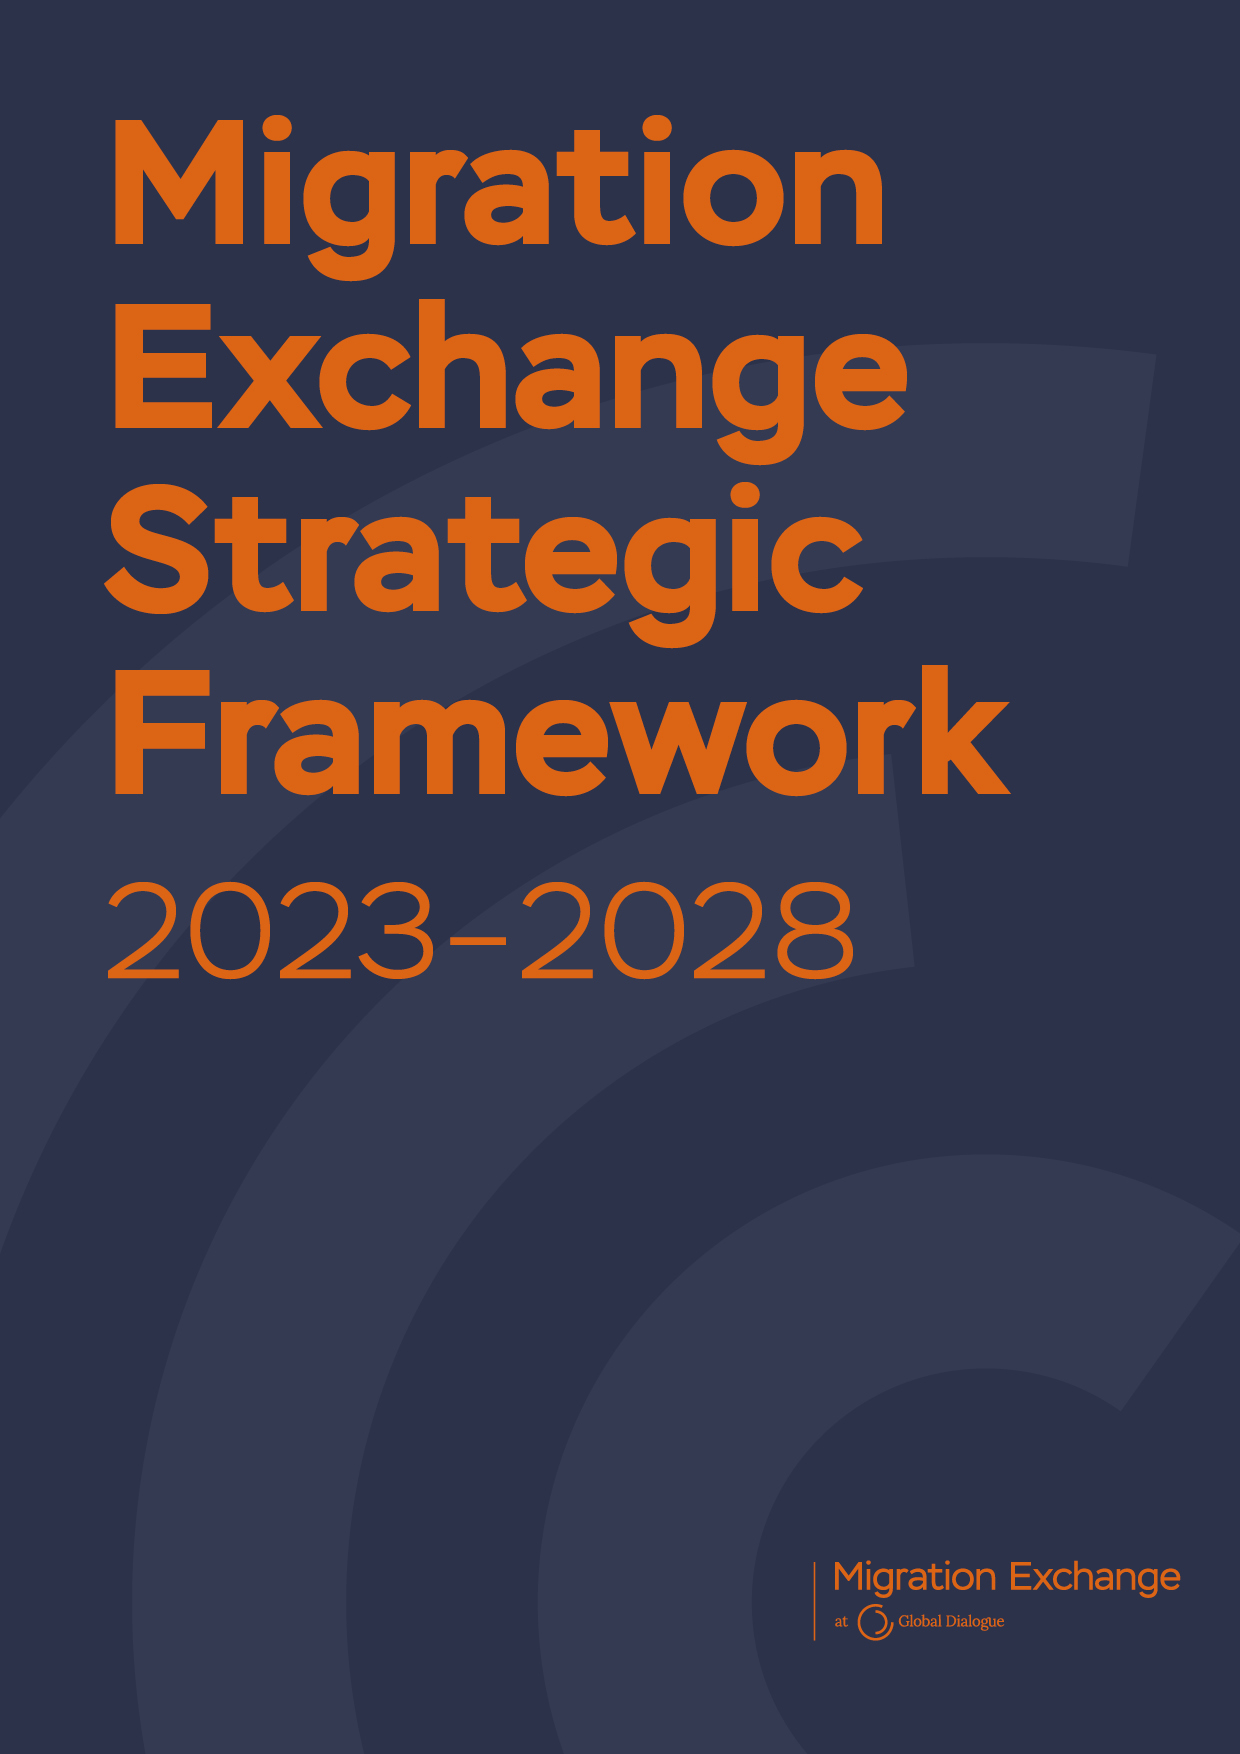 MEX Strategic Framework 2023-2028 and New Co-director